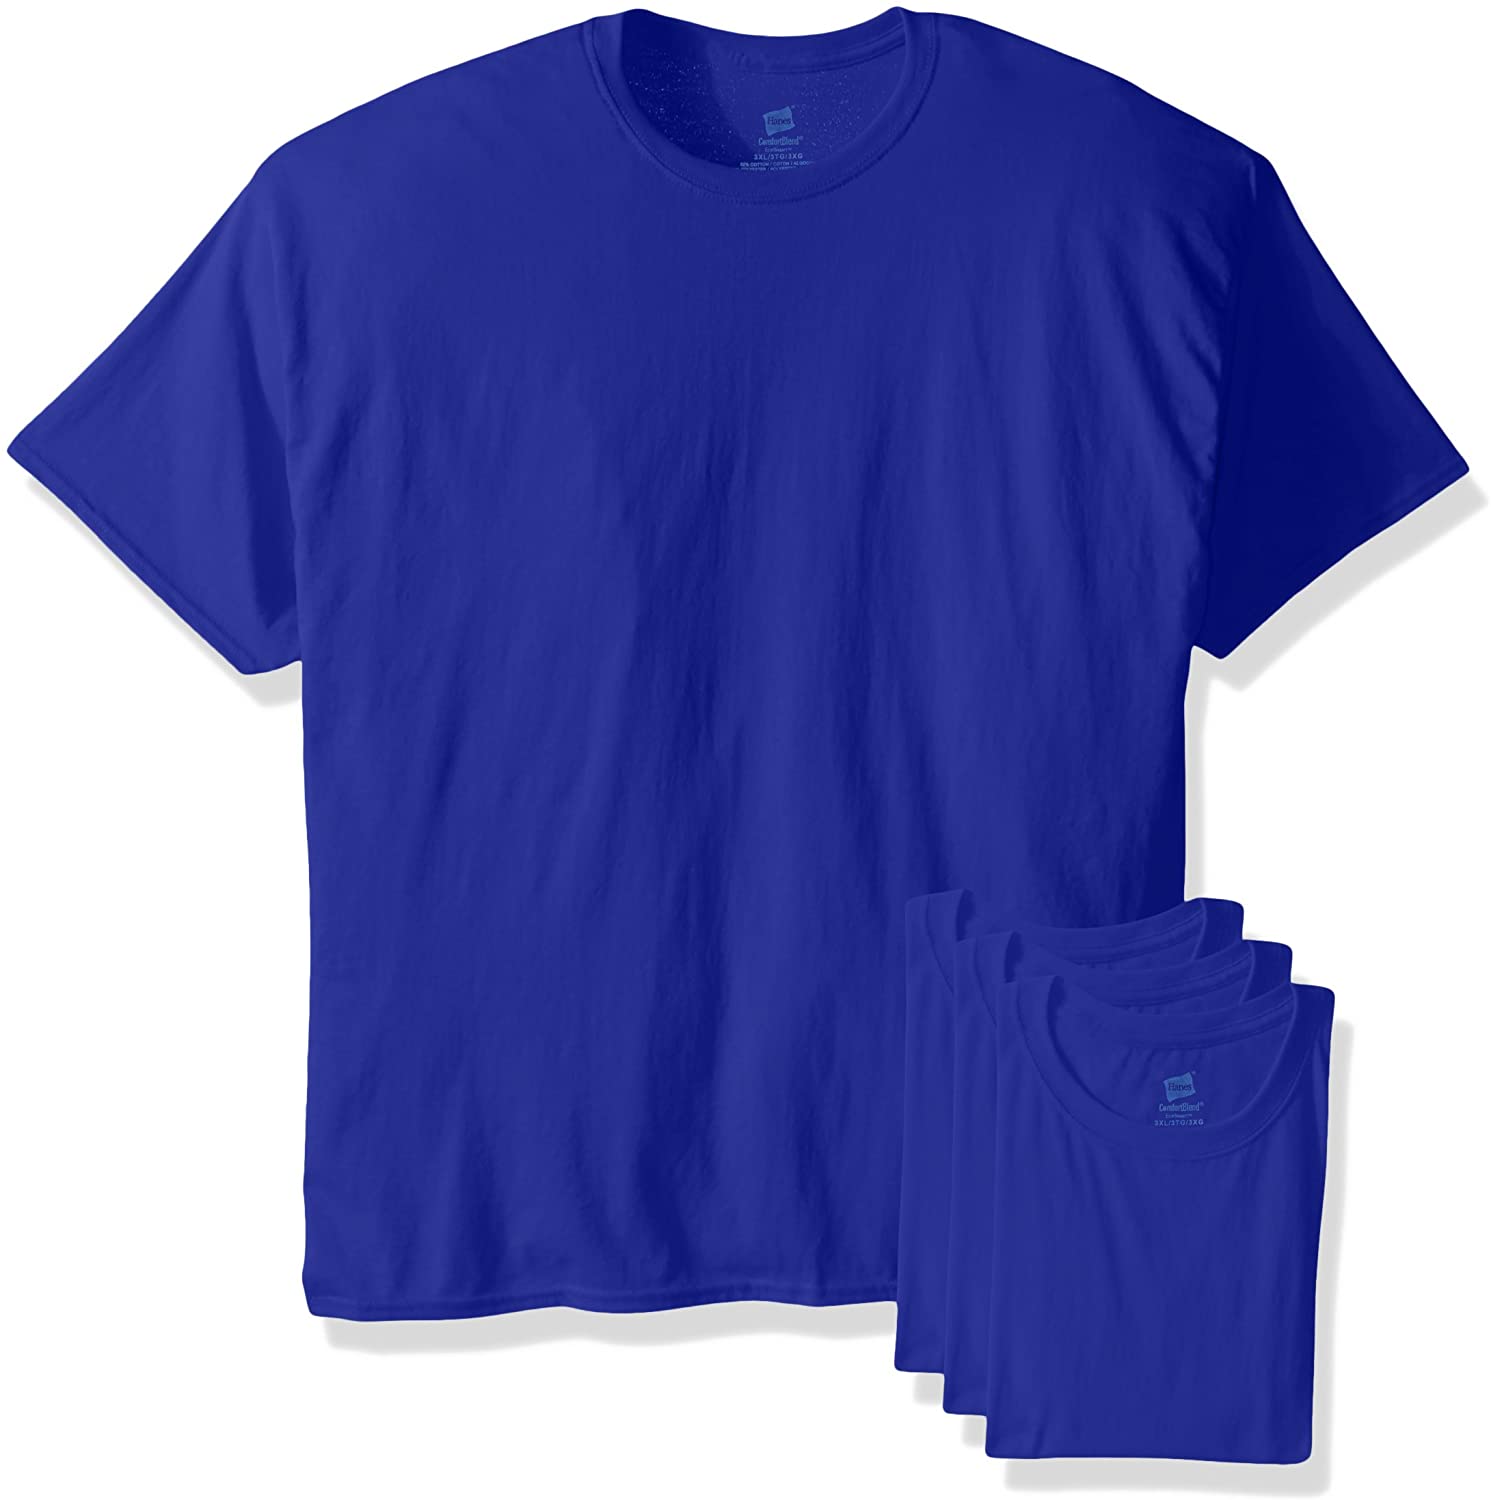 Hanes Branded Printwear Mens EcoSmart T-Shirt Select SZ/Color. Pack of 4 